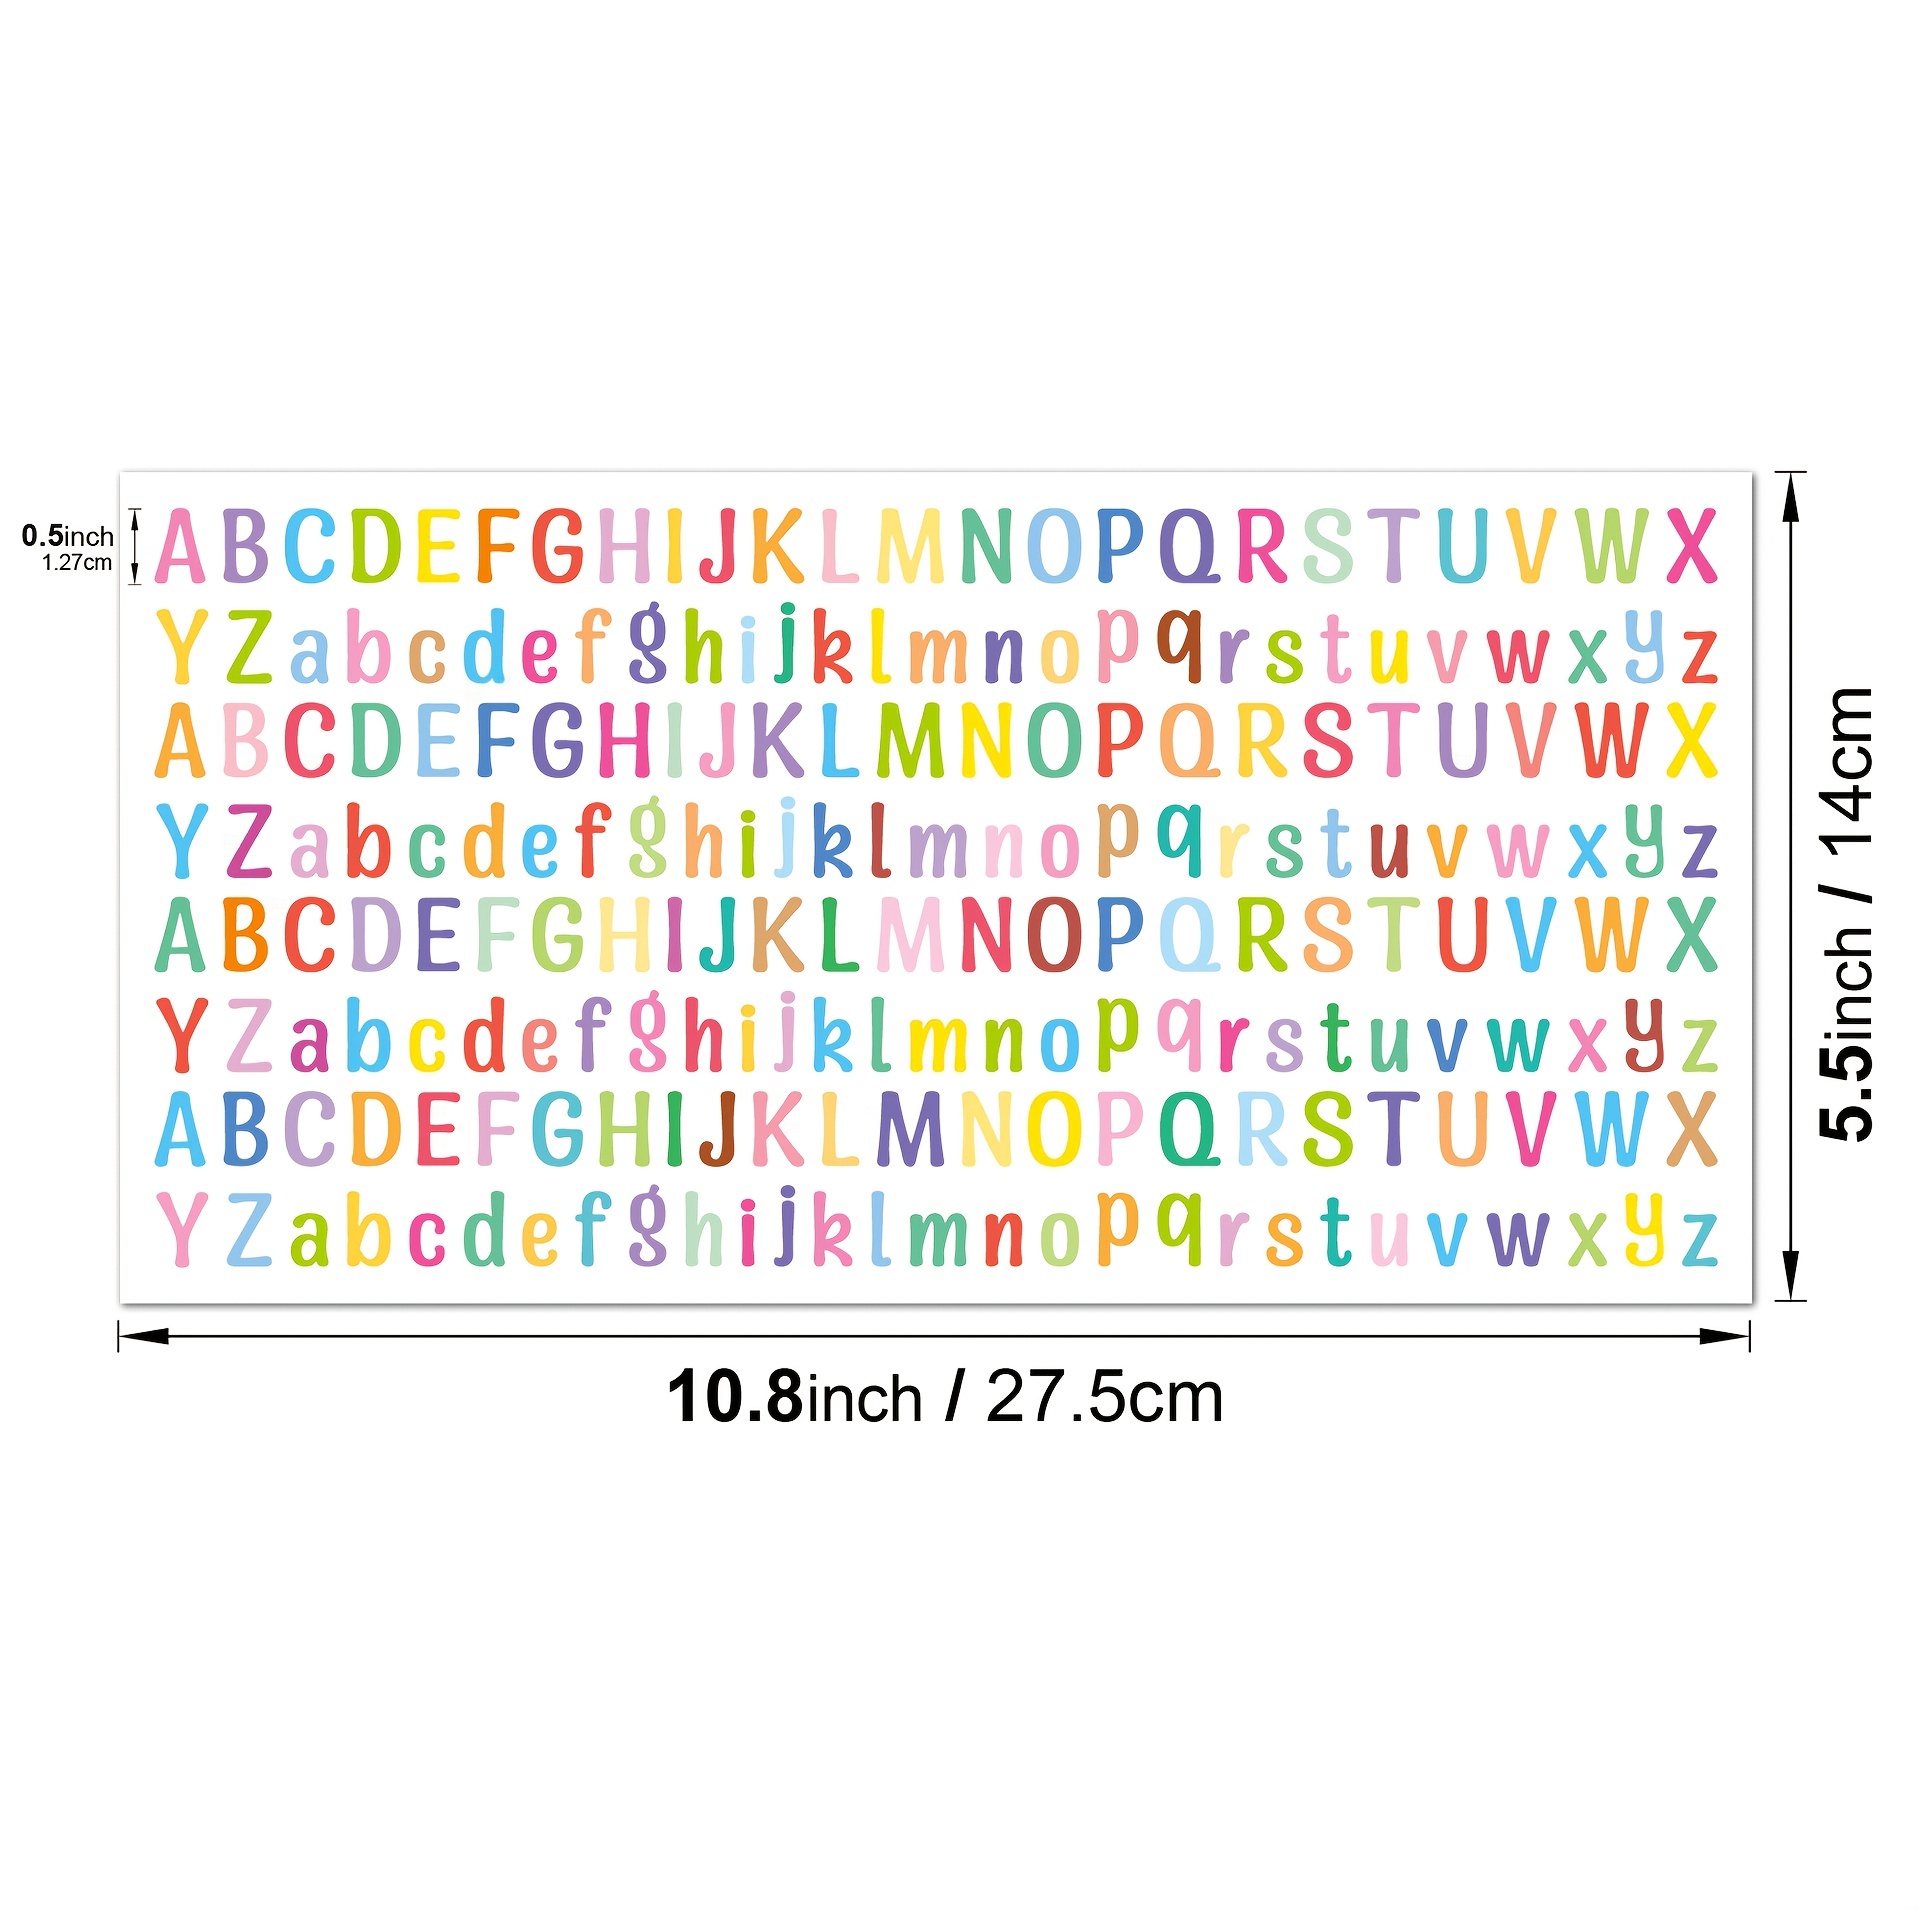 12.7mm 1/2 half inch Self Adhesive Vinyl Sticker Letters Numbers